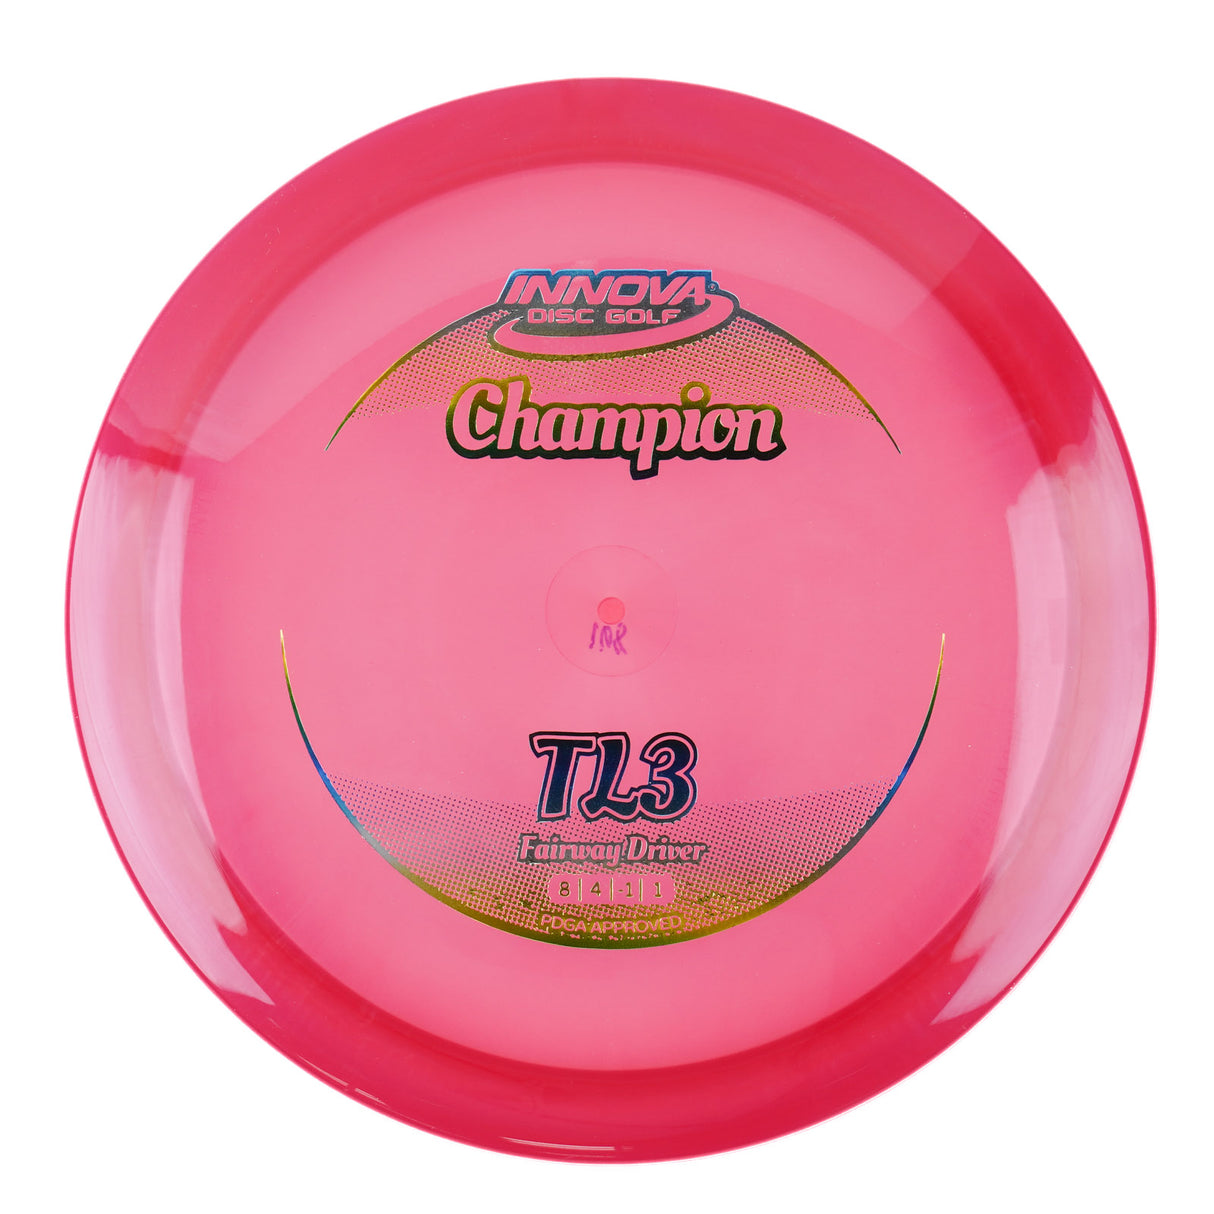 Innova TL3 - Champion 170g | Style 0001